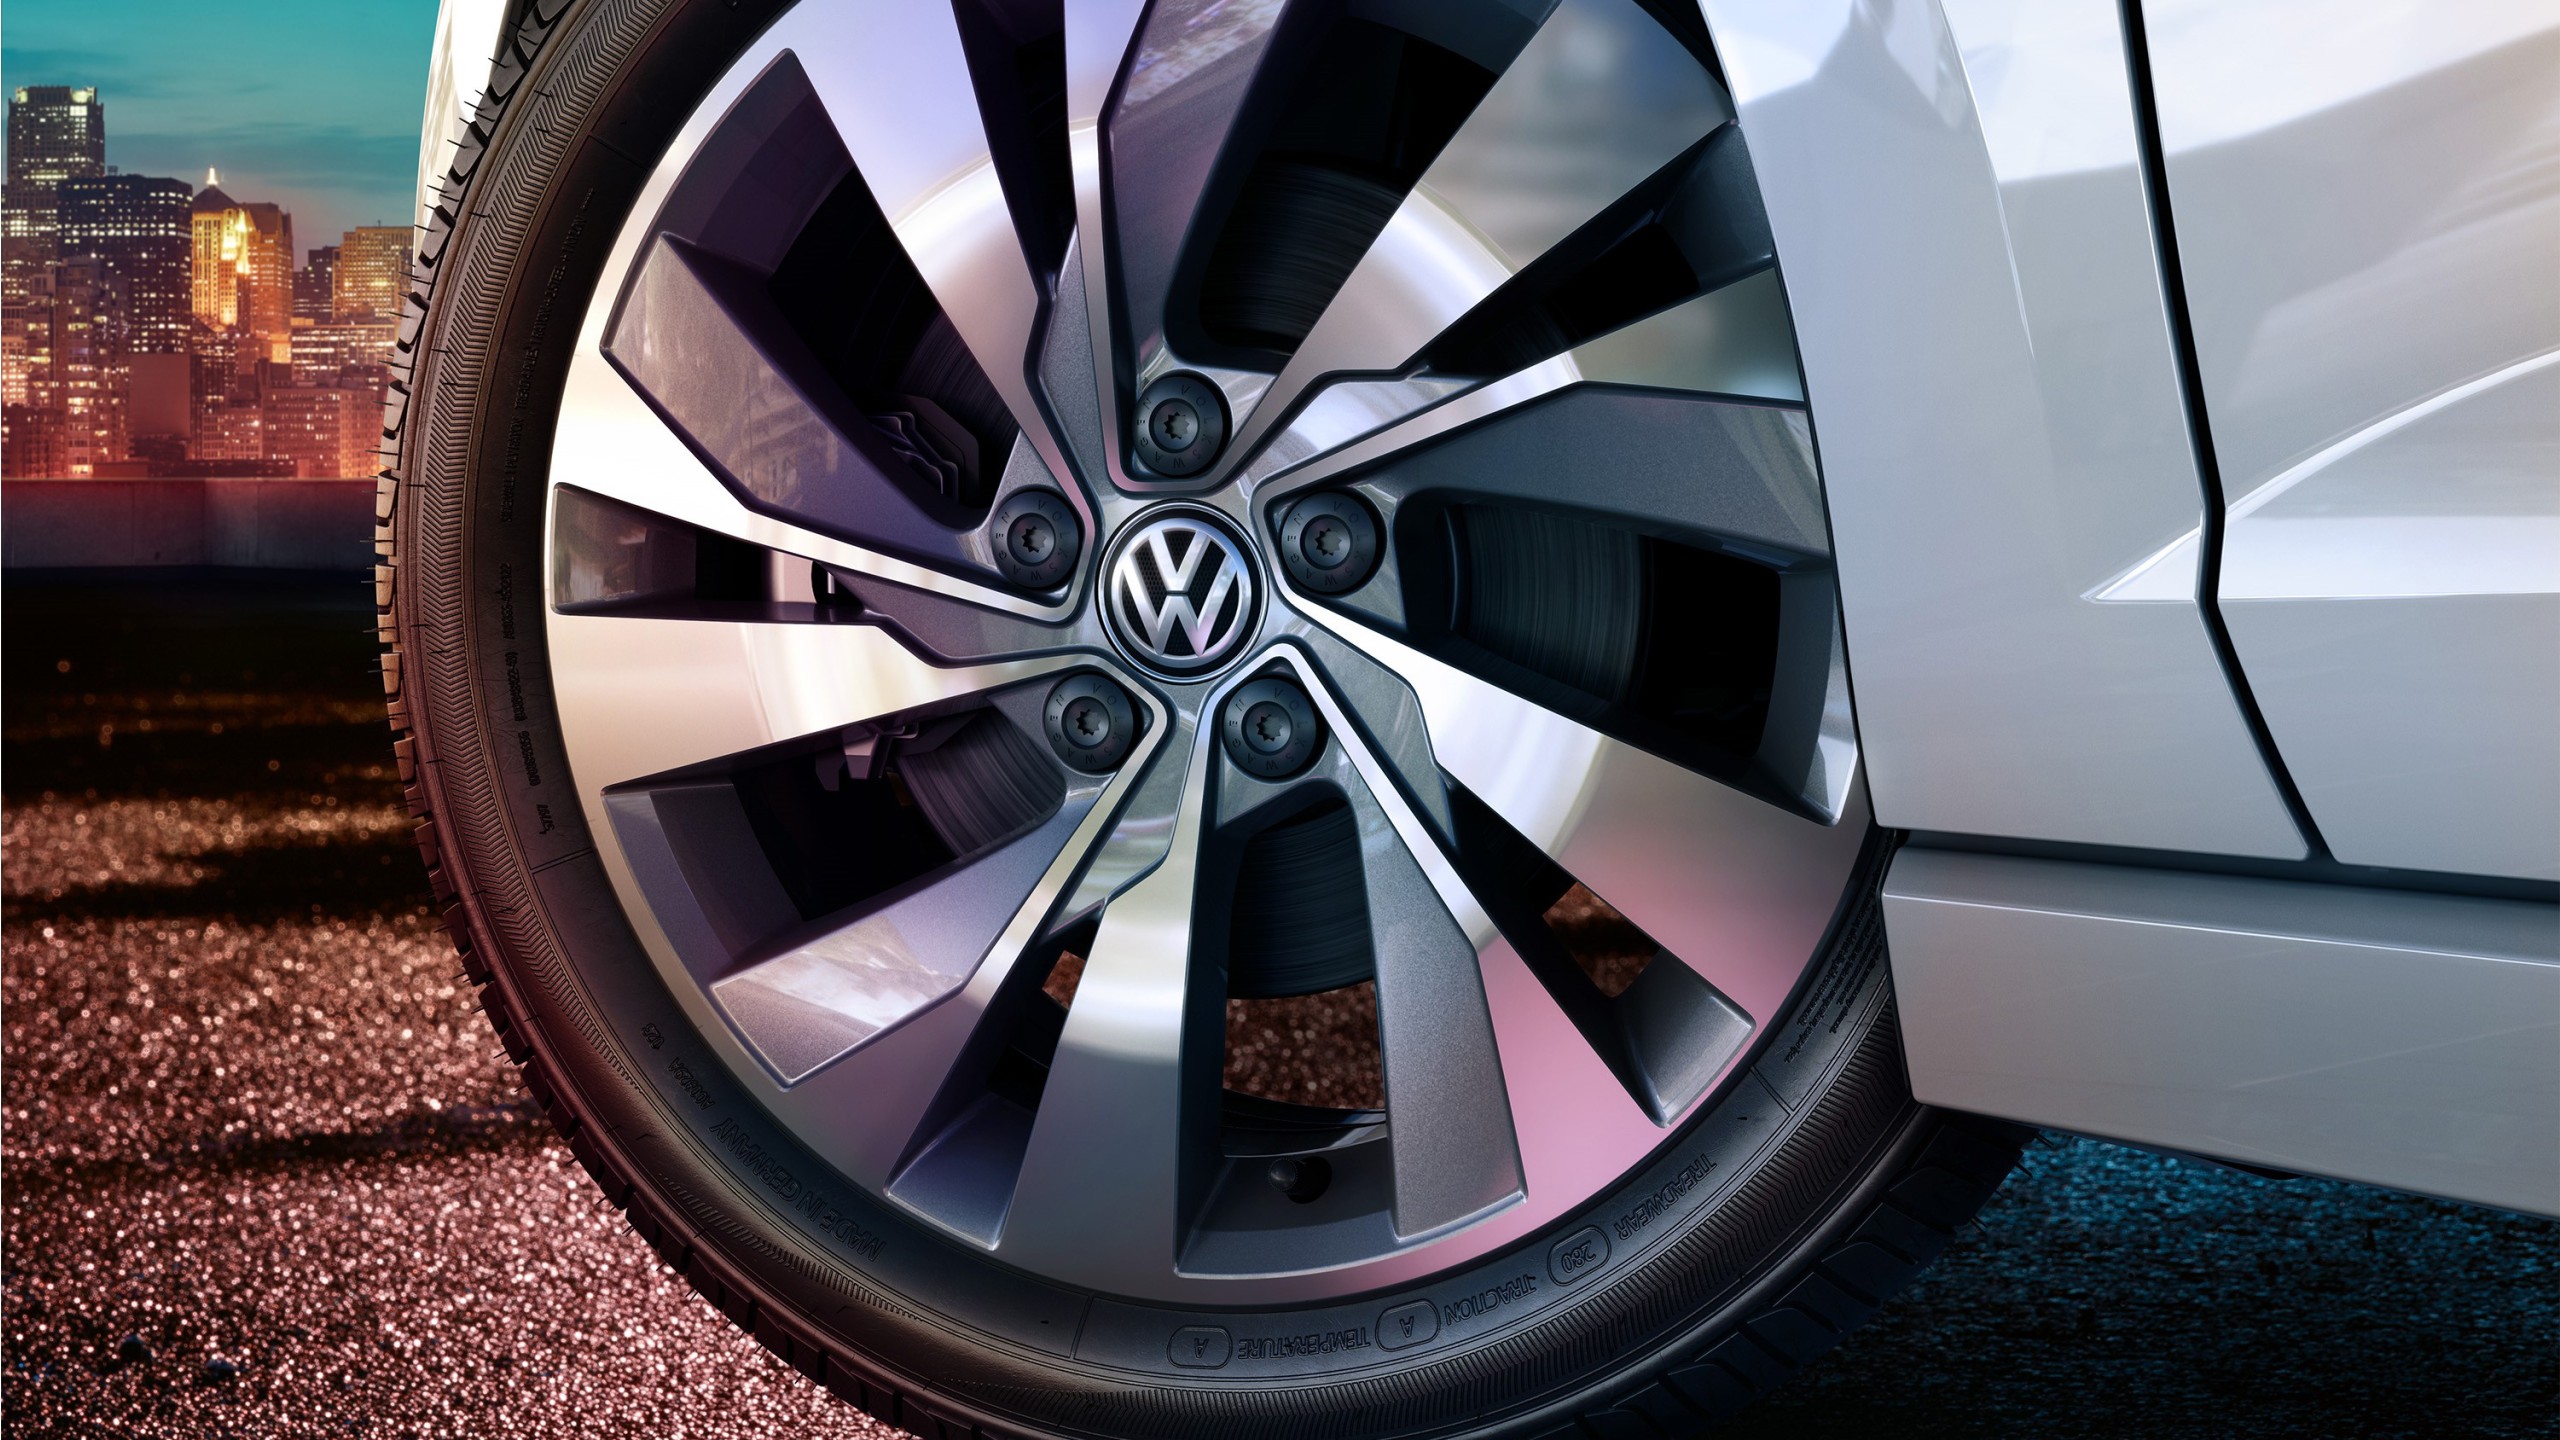 Volkswagen Polo Alloy Wheel Design Wallpaper | HD Car Wallpapers | ID #109542560 x 1440